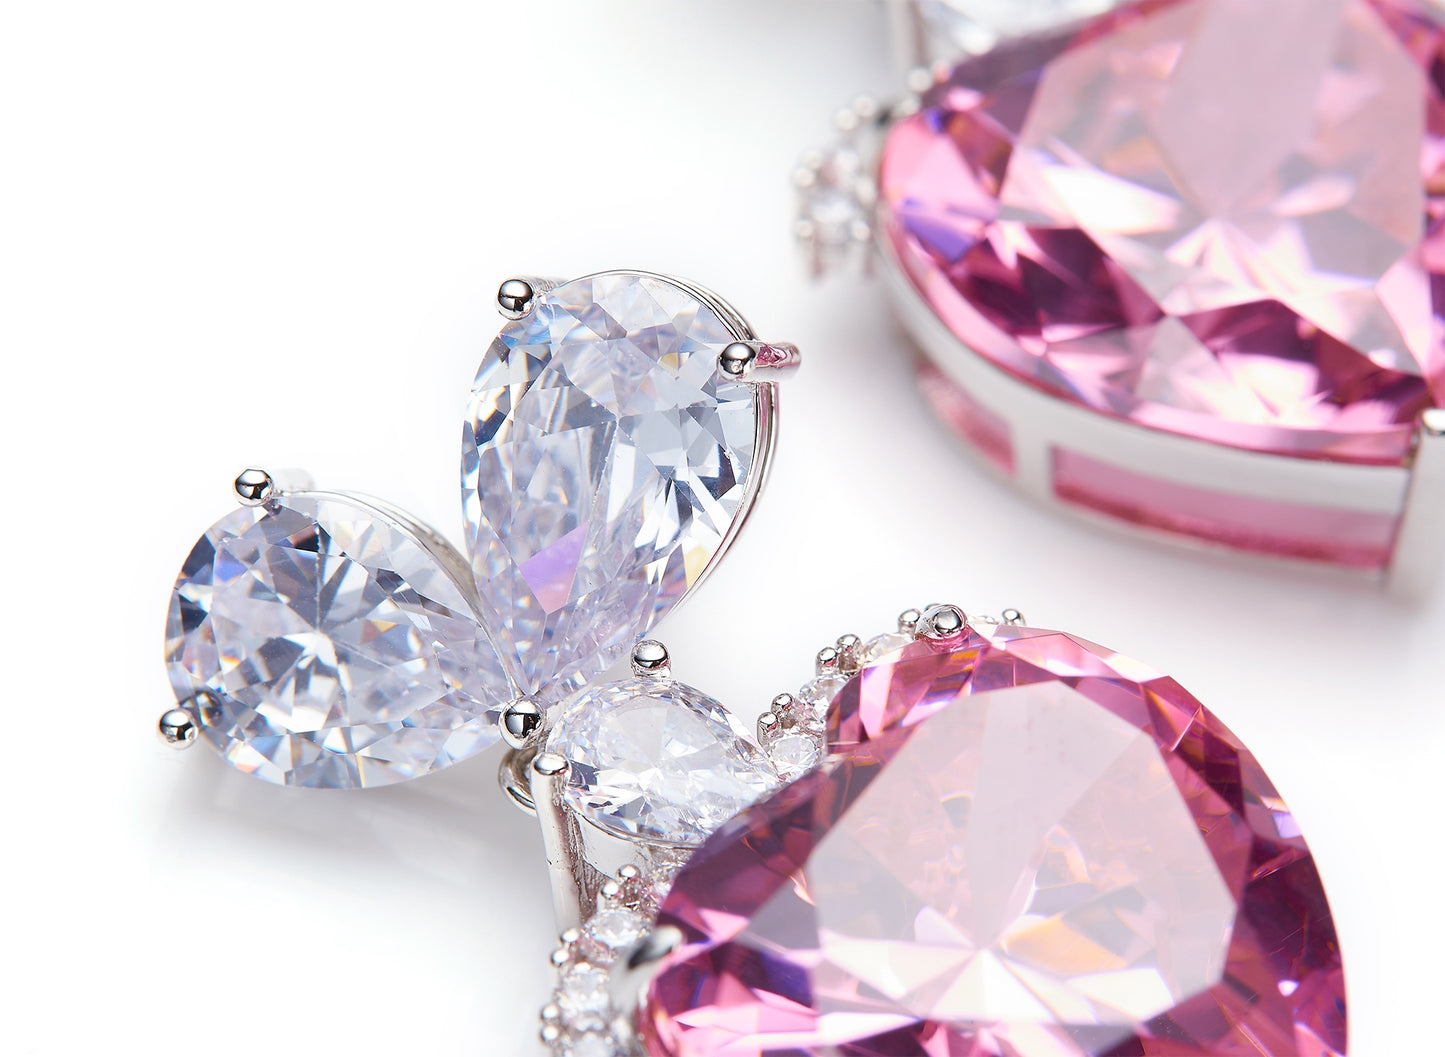 Valentina Earrings (Light Pink) (Final Sale)